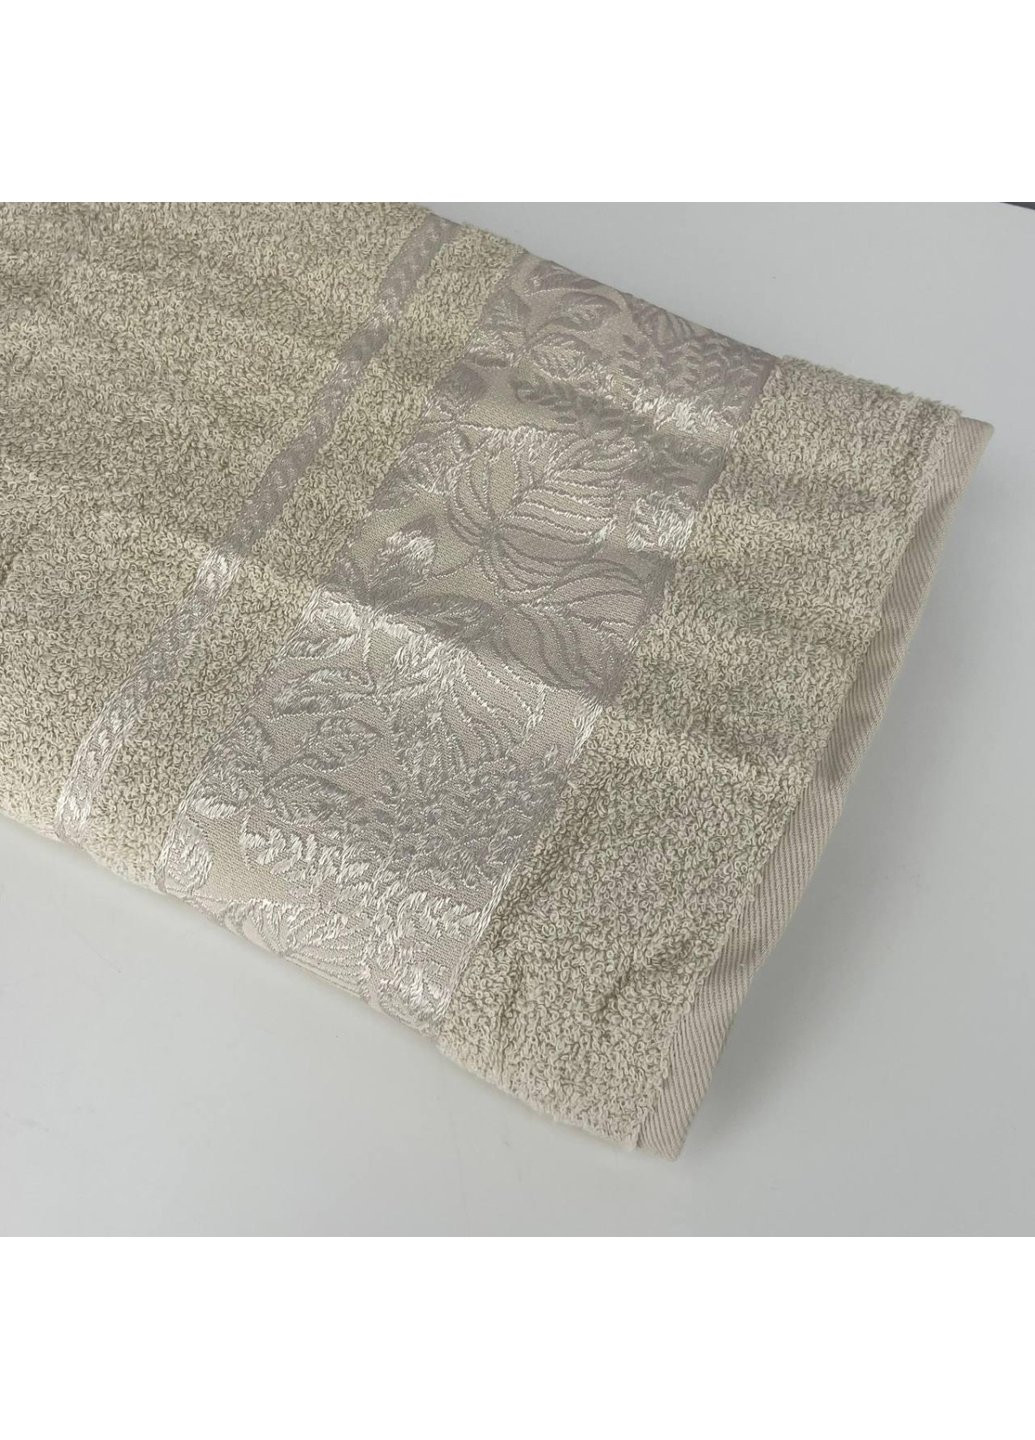 Power полотенце банное махровое febo vip cotton botanik турция 6381 бежевое 70х140 см комбинированный производство - Турция